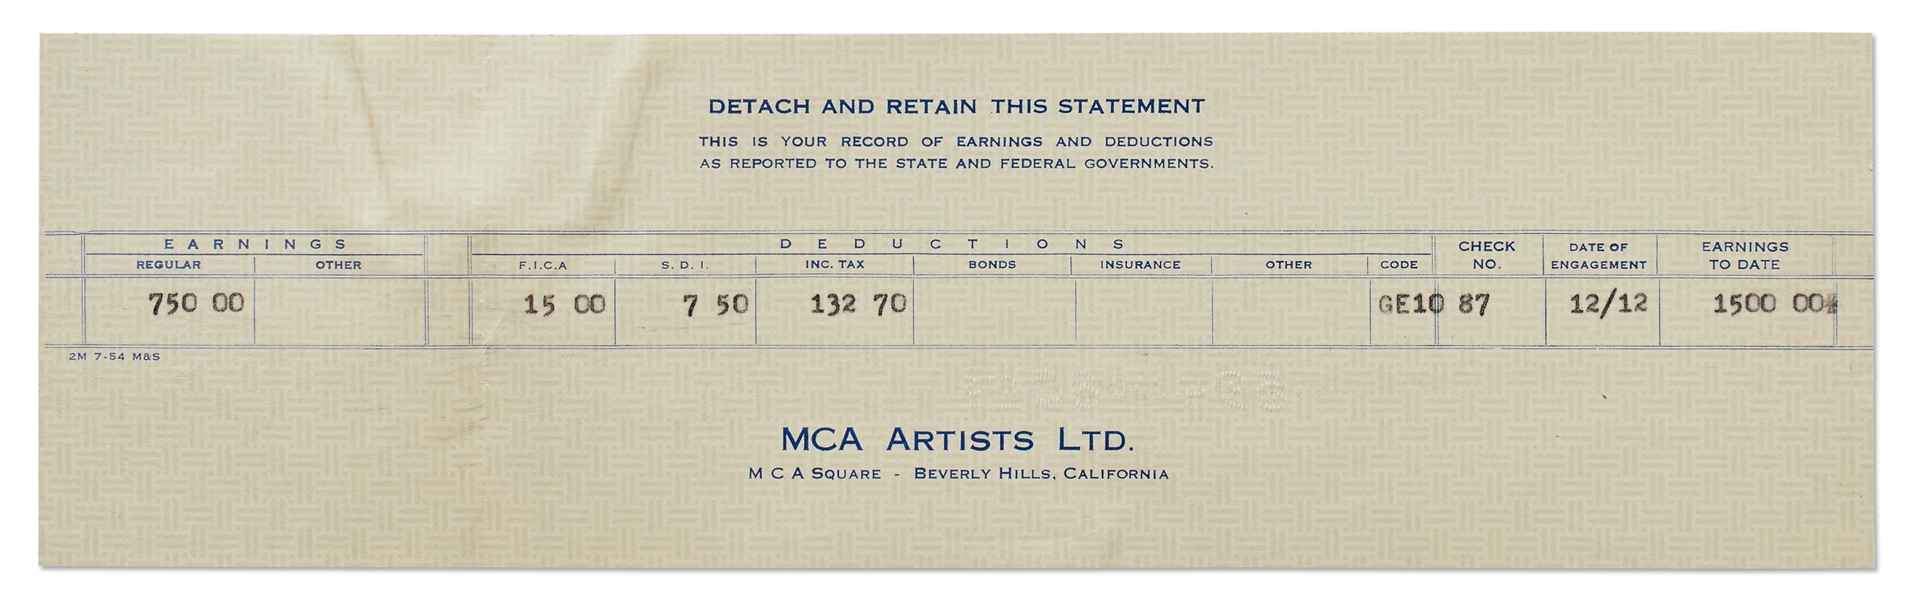 Financial Paperwork for James Dean in December 1954